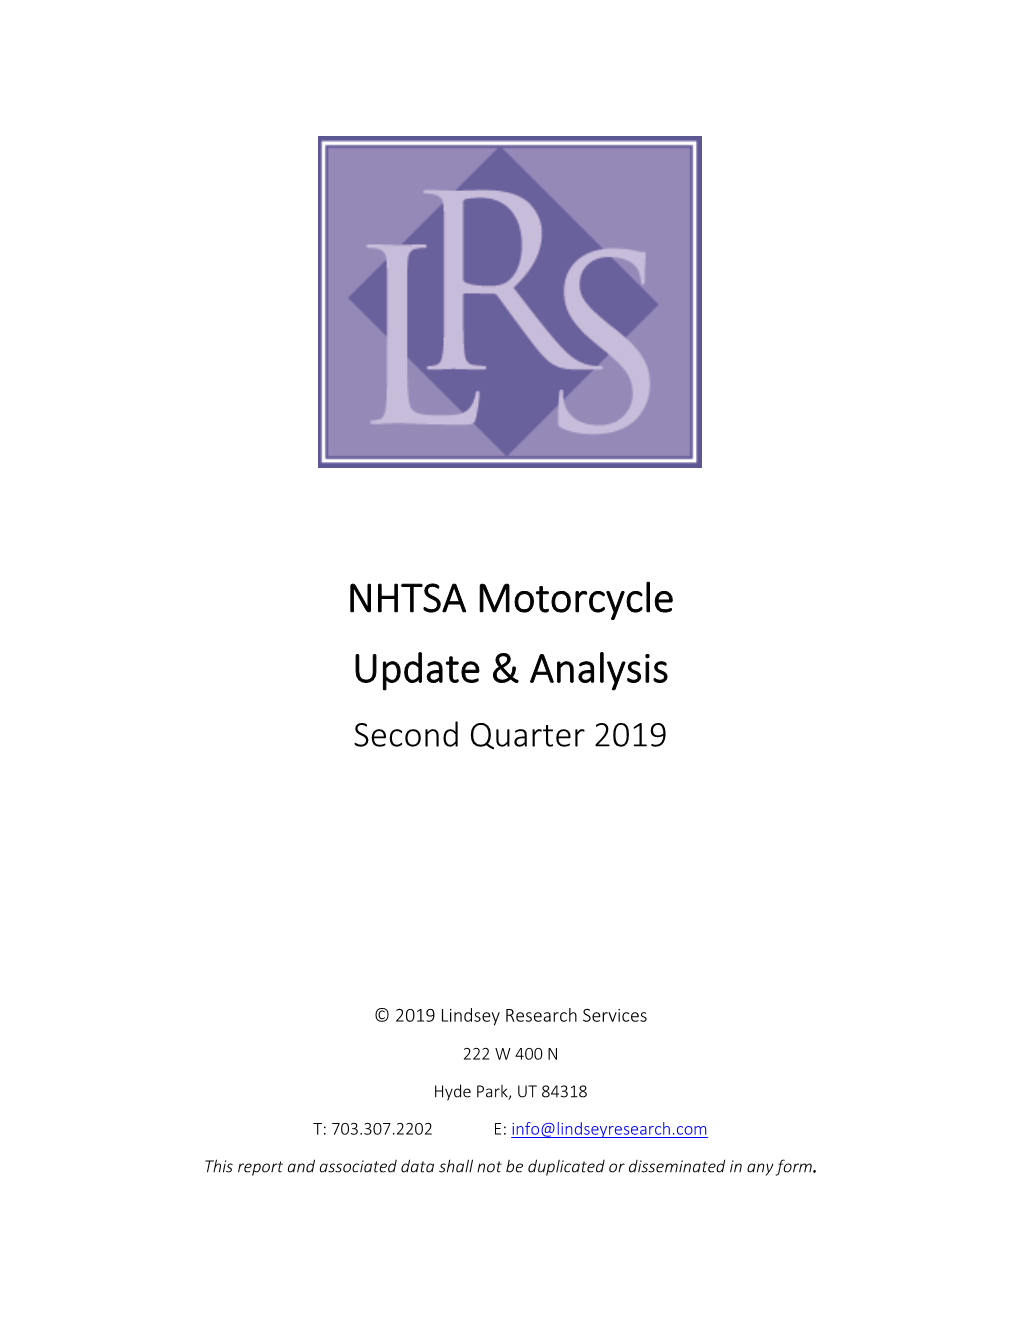 NHTSA Motorcycle Update & Analysis